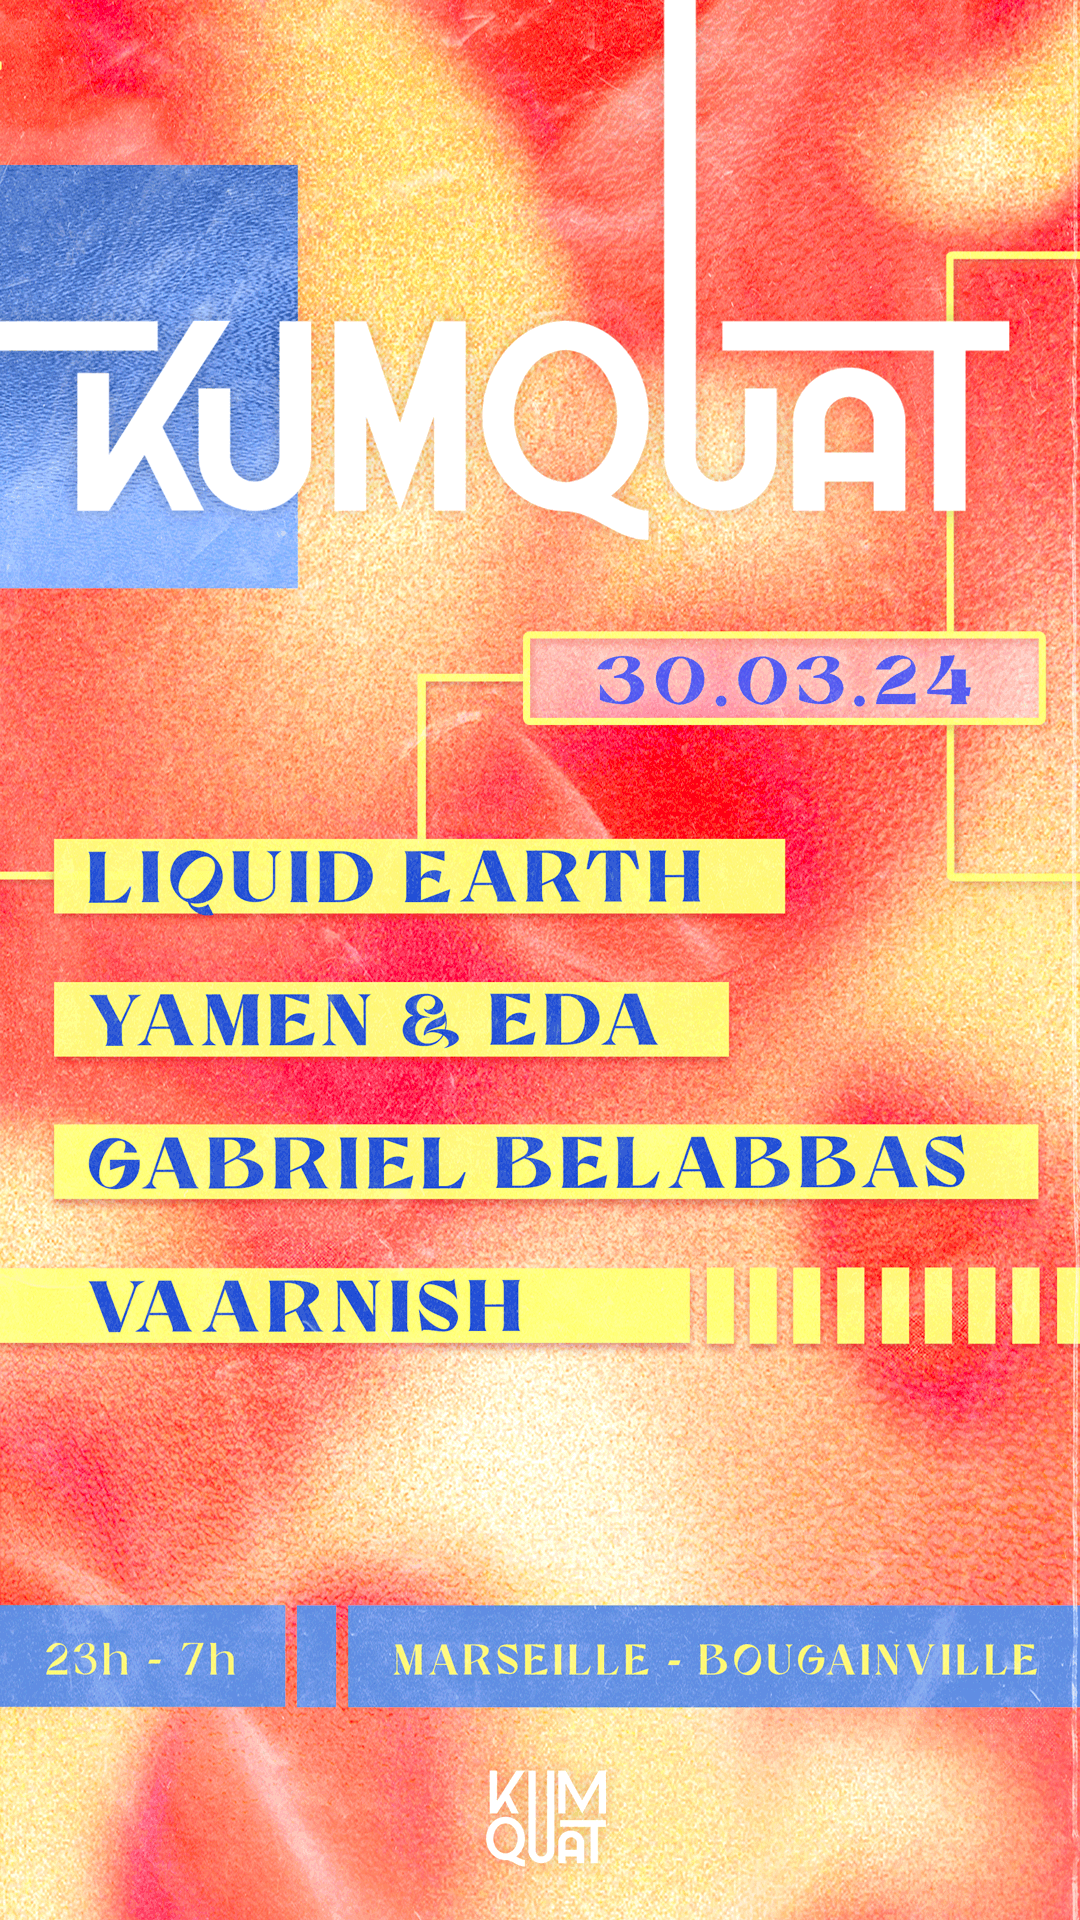 Kumquat with Liquid Earth, Yamen & EDA, Gabriel Belabbas, Vaarnish - フライヤー表